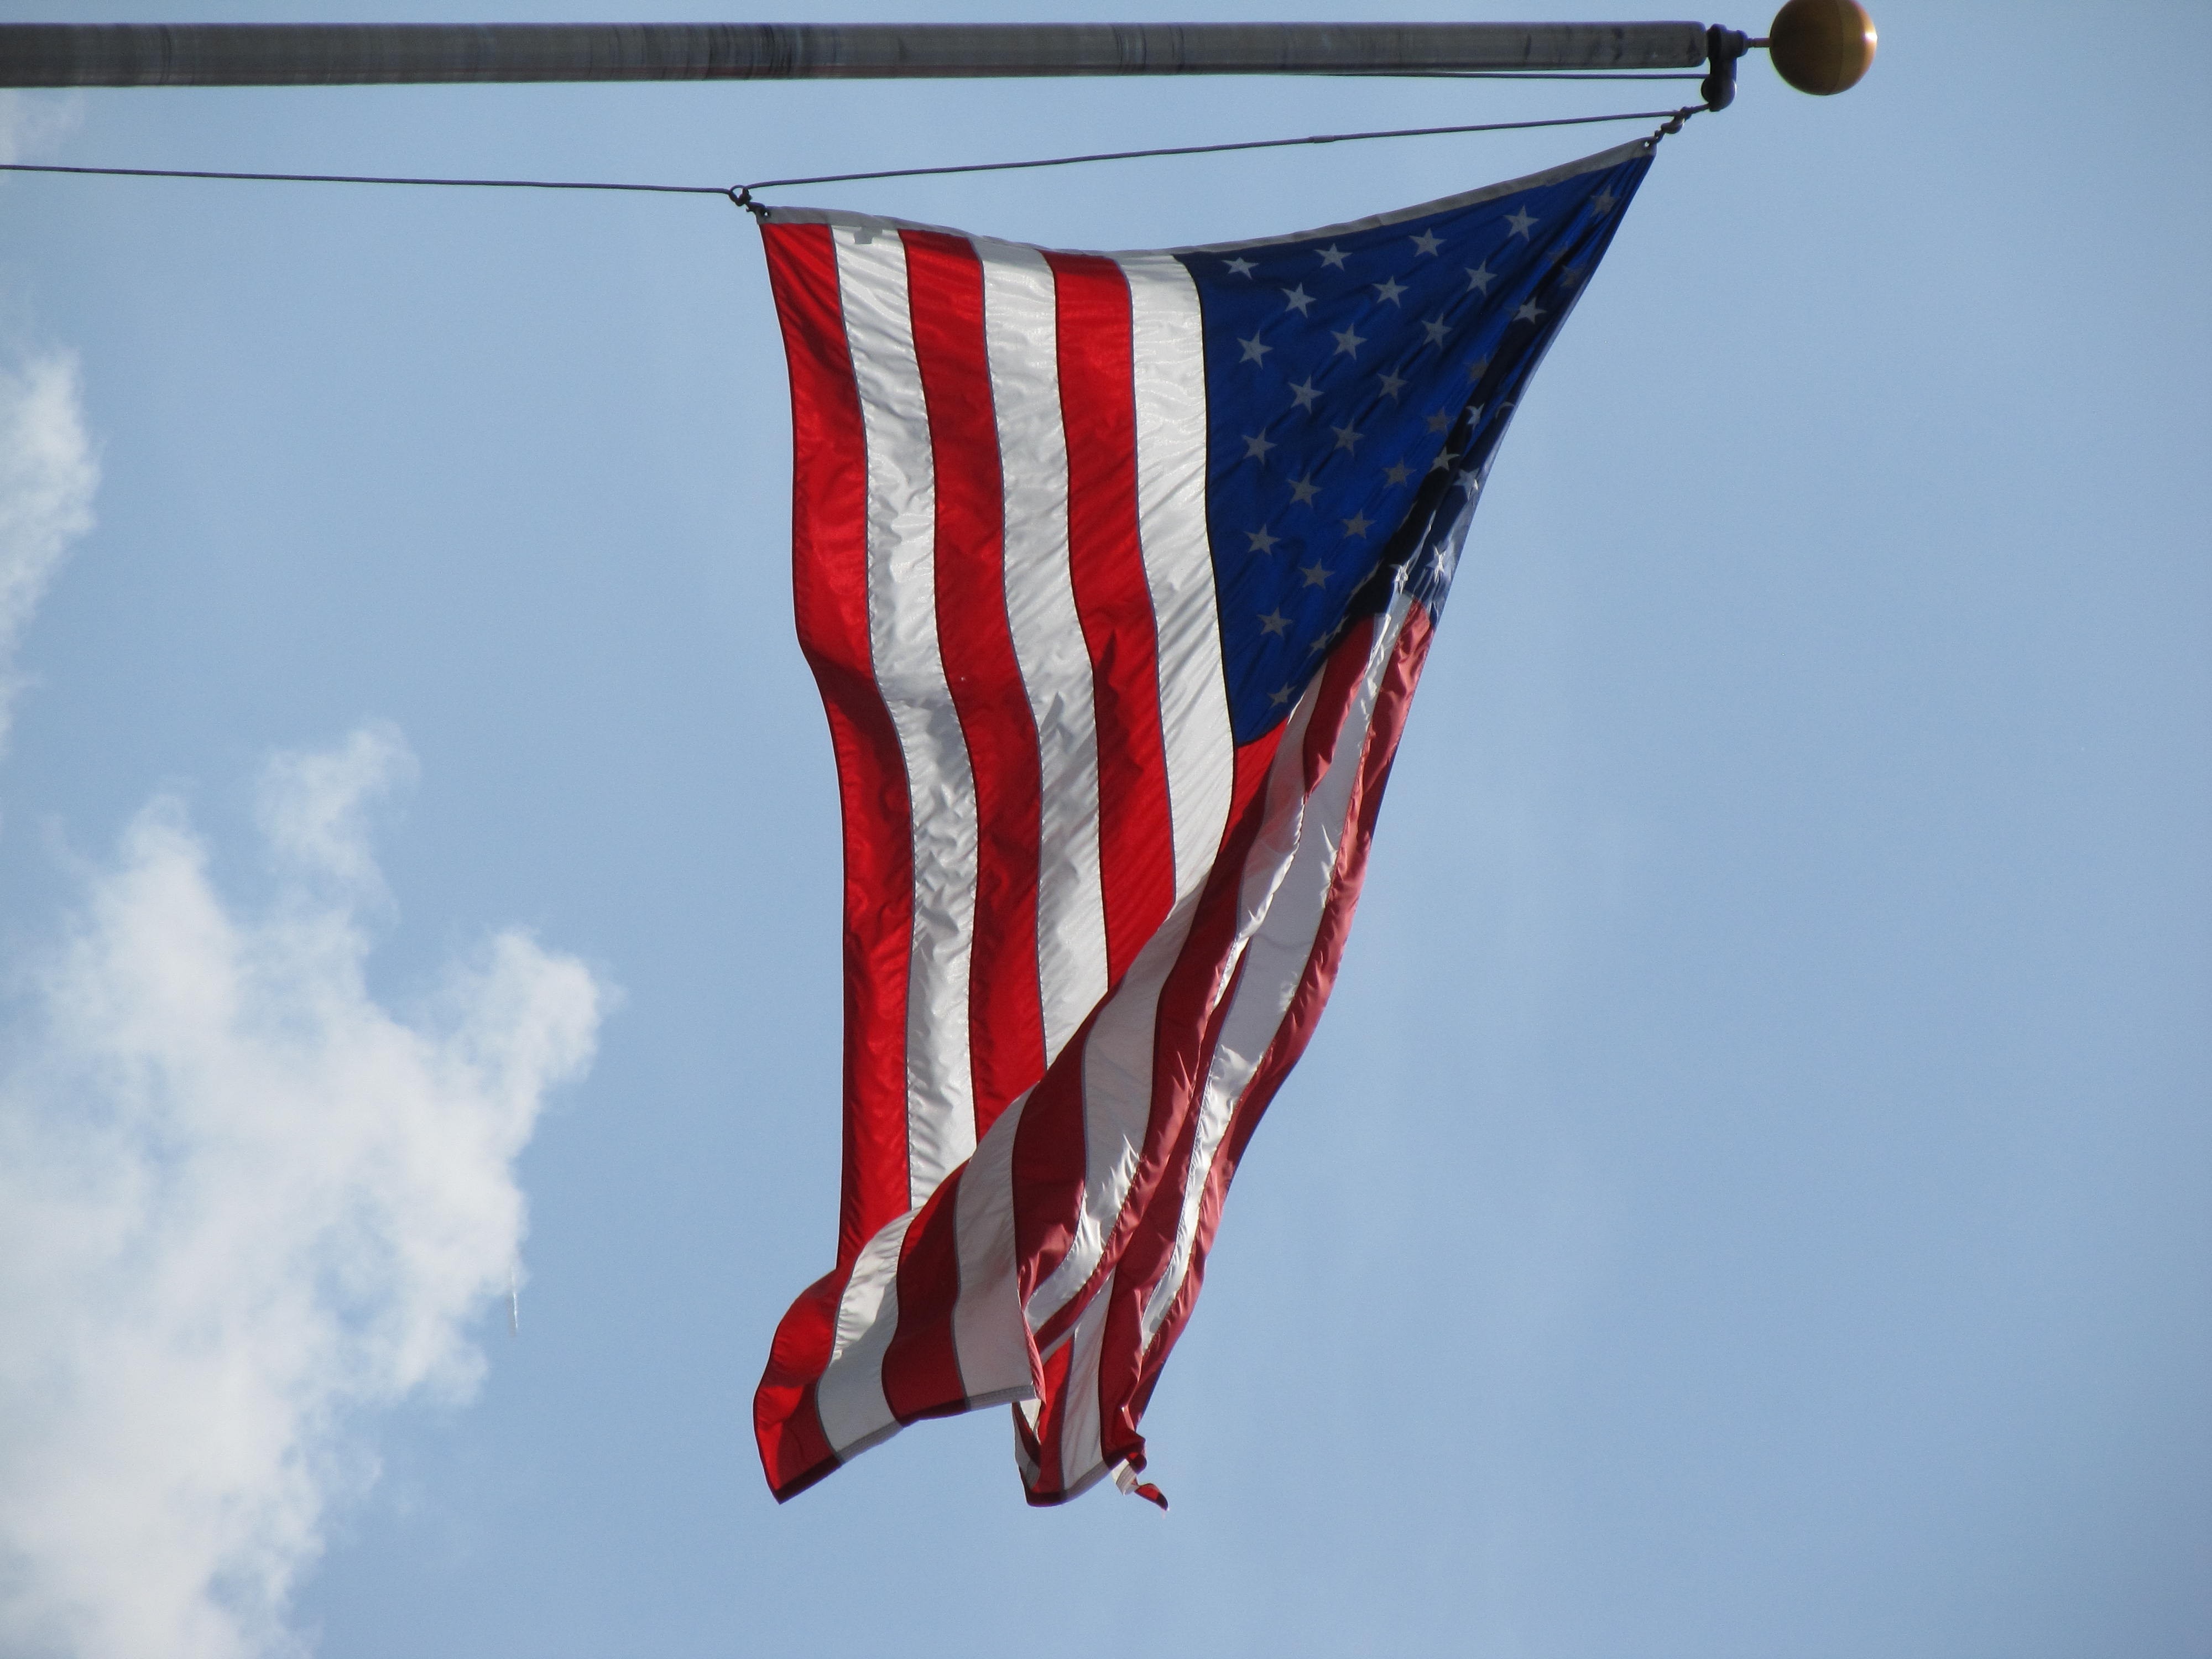 U.S.A. flag under clear blue sky